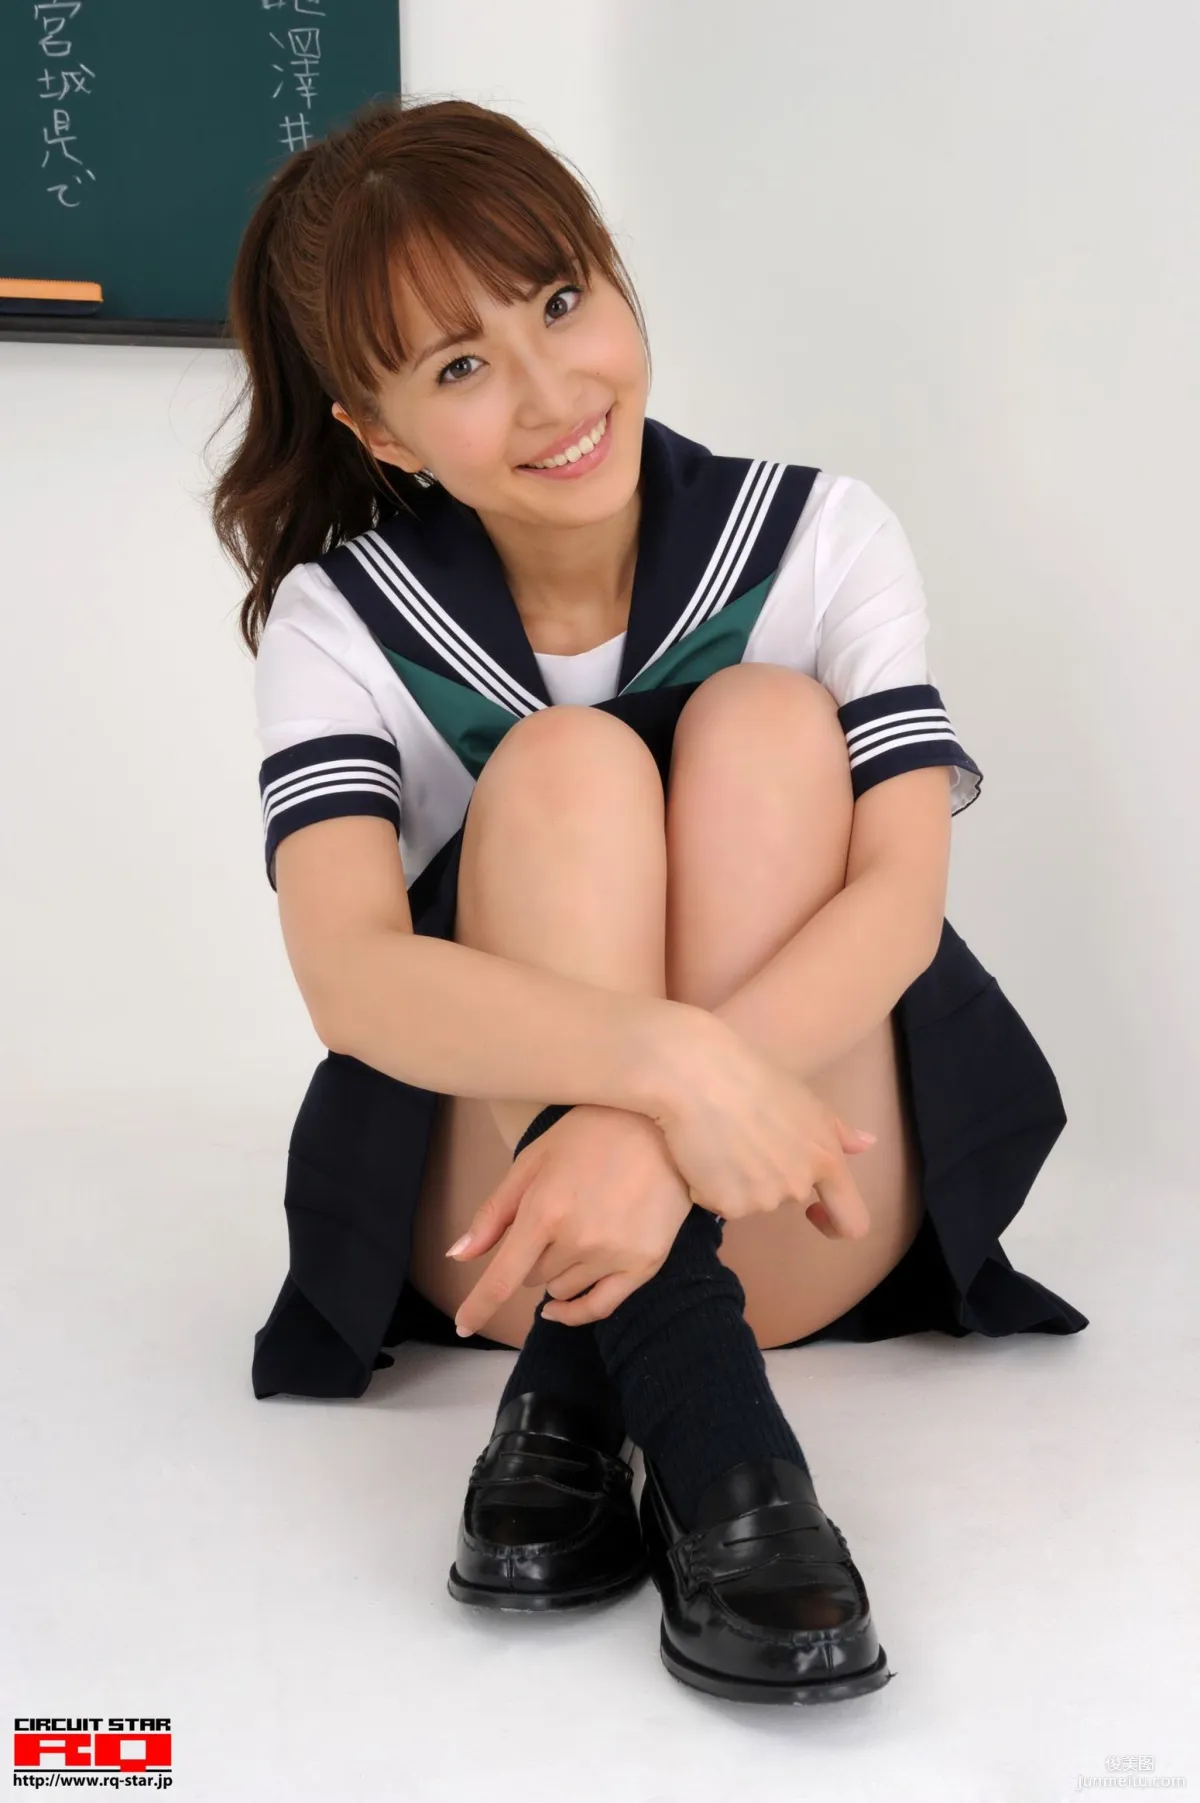 [RQ-STAR] NO.00312 Rena Sawai 澤井玲菜 School Girl 写真集125